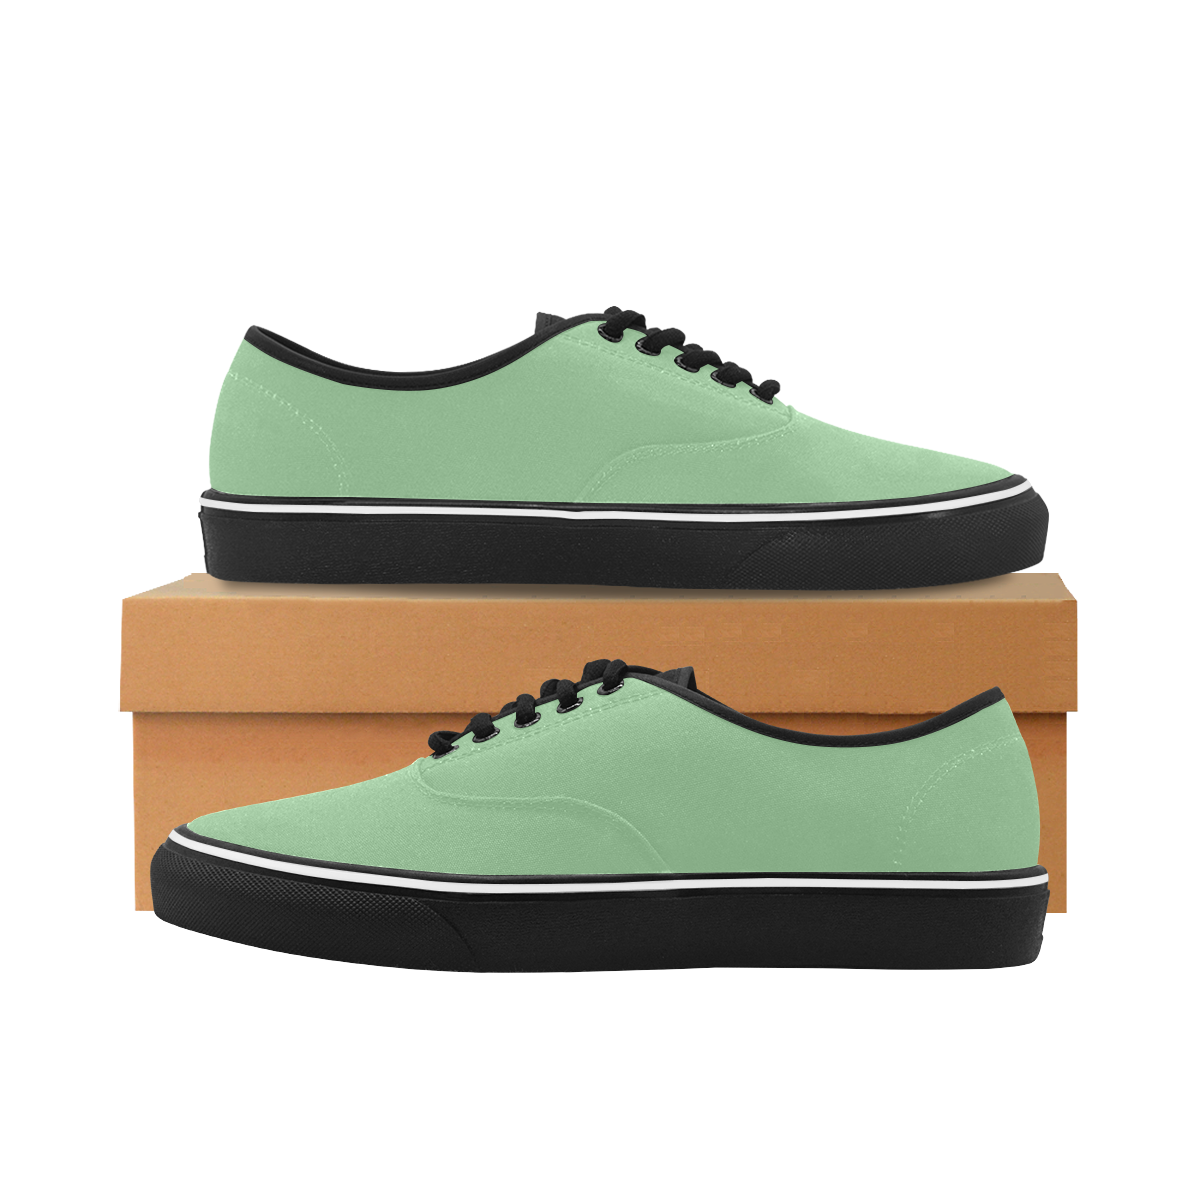 color dark sea green Classic Men's Canvas Low Top Shoes/Large (Model E001-4)